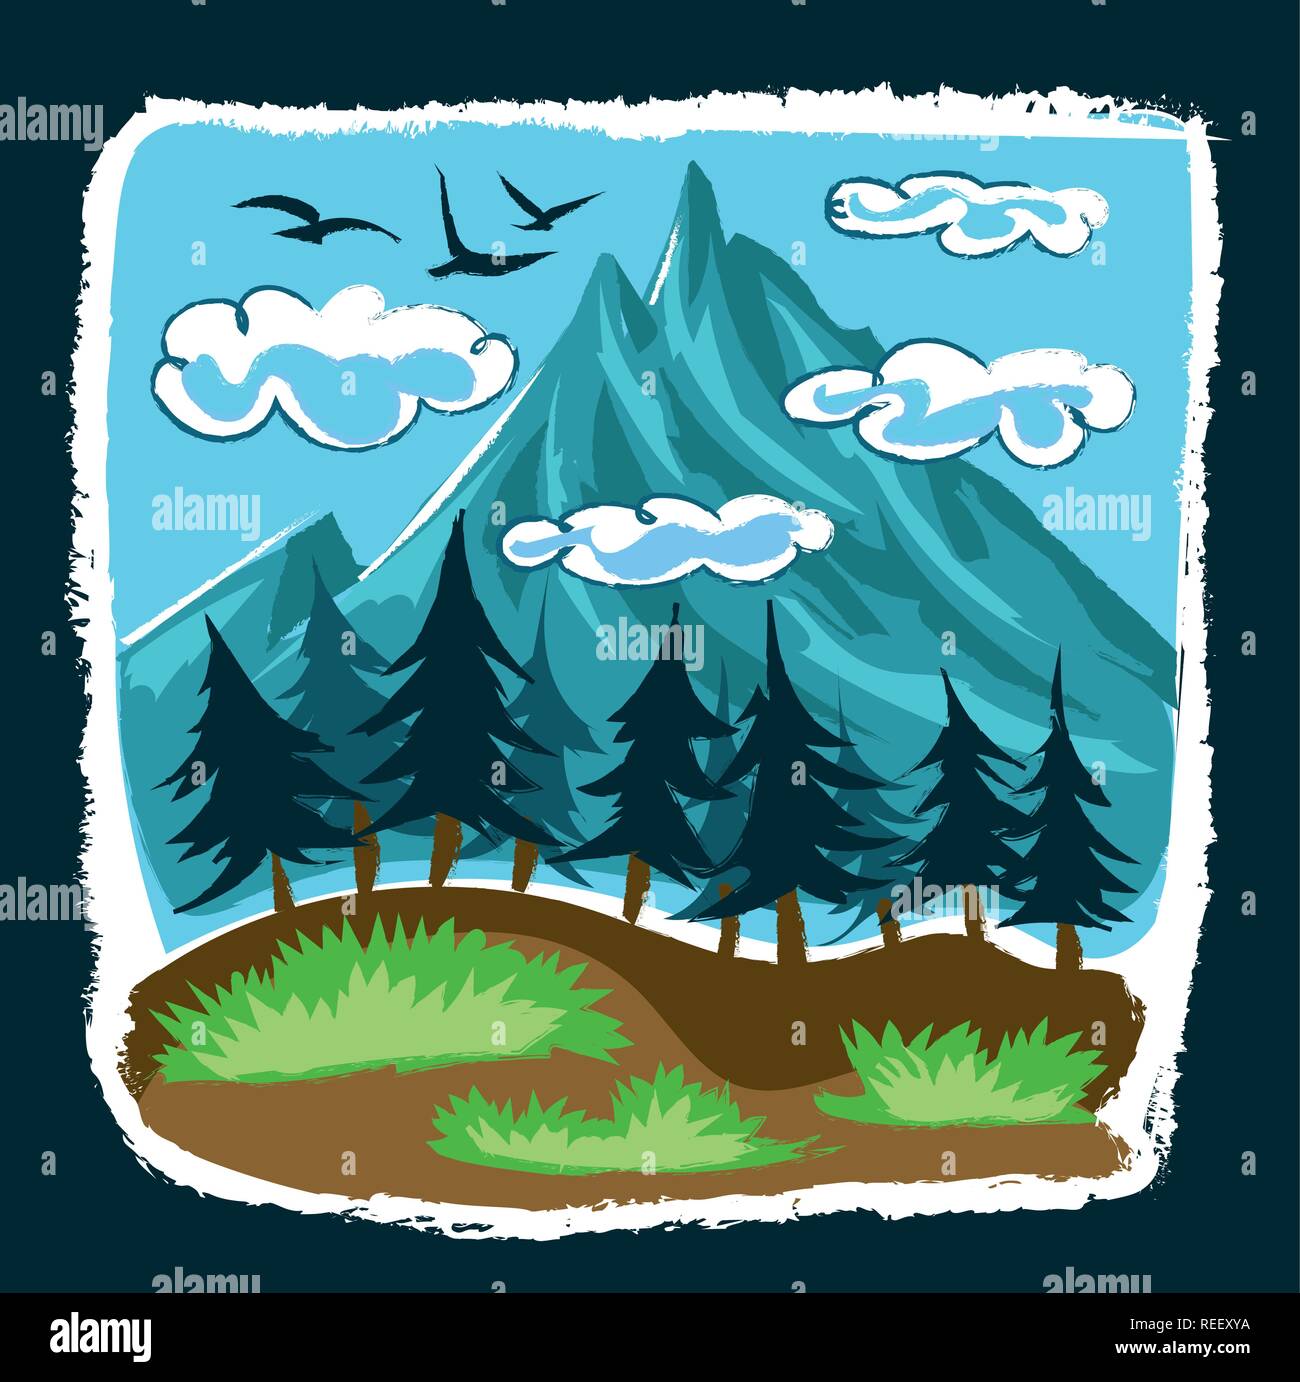 Vista montagna paesaggi cartoni stile grafico illustrazione vettoriale Illustrazione Vettoriale